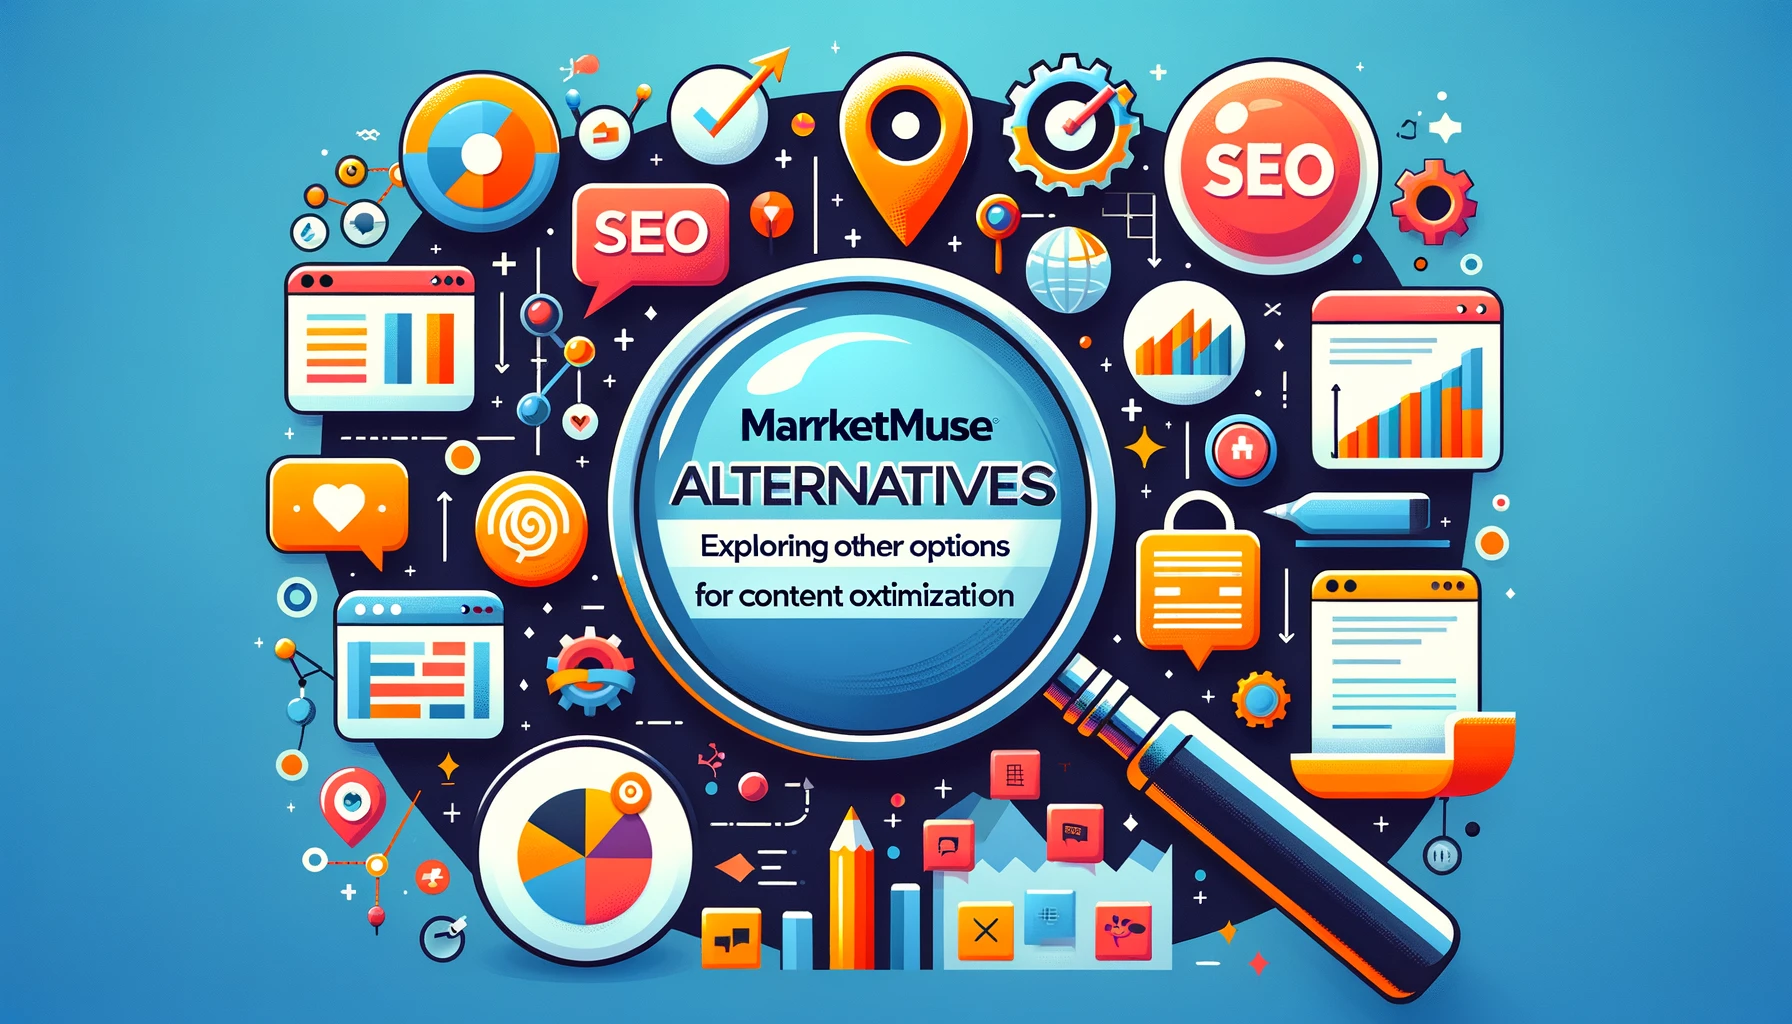 MarketMuse Alternatives: Exploring Other Options for Content Optimisation